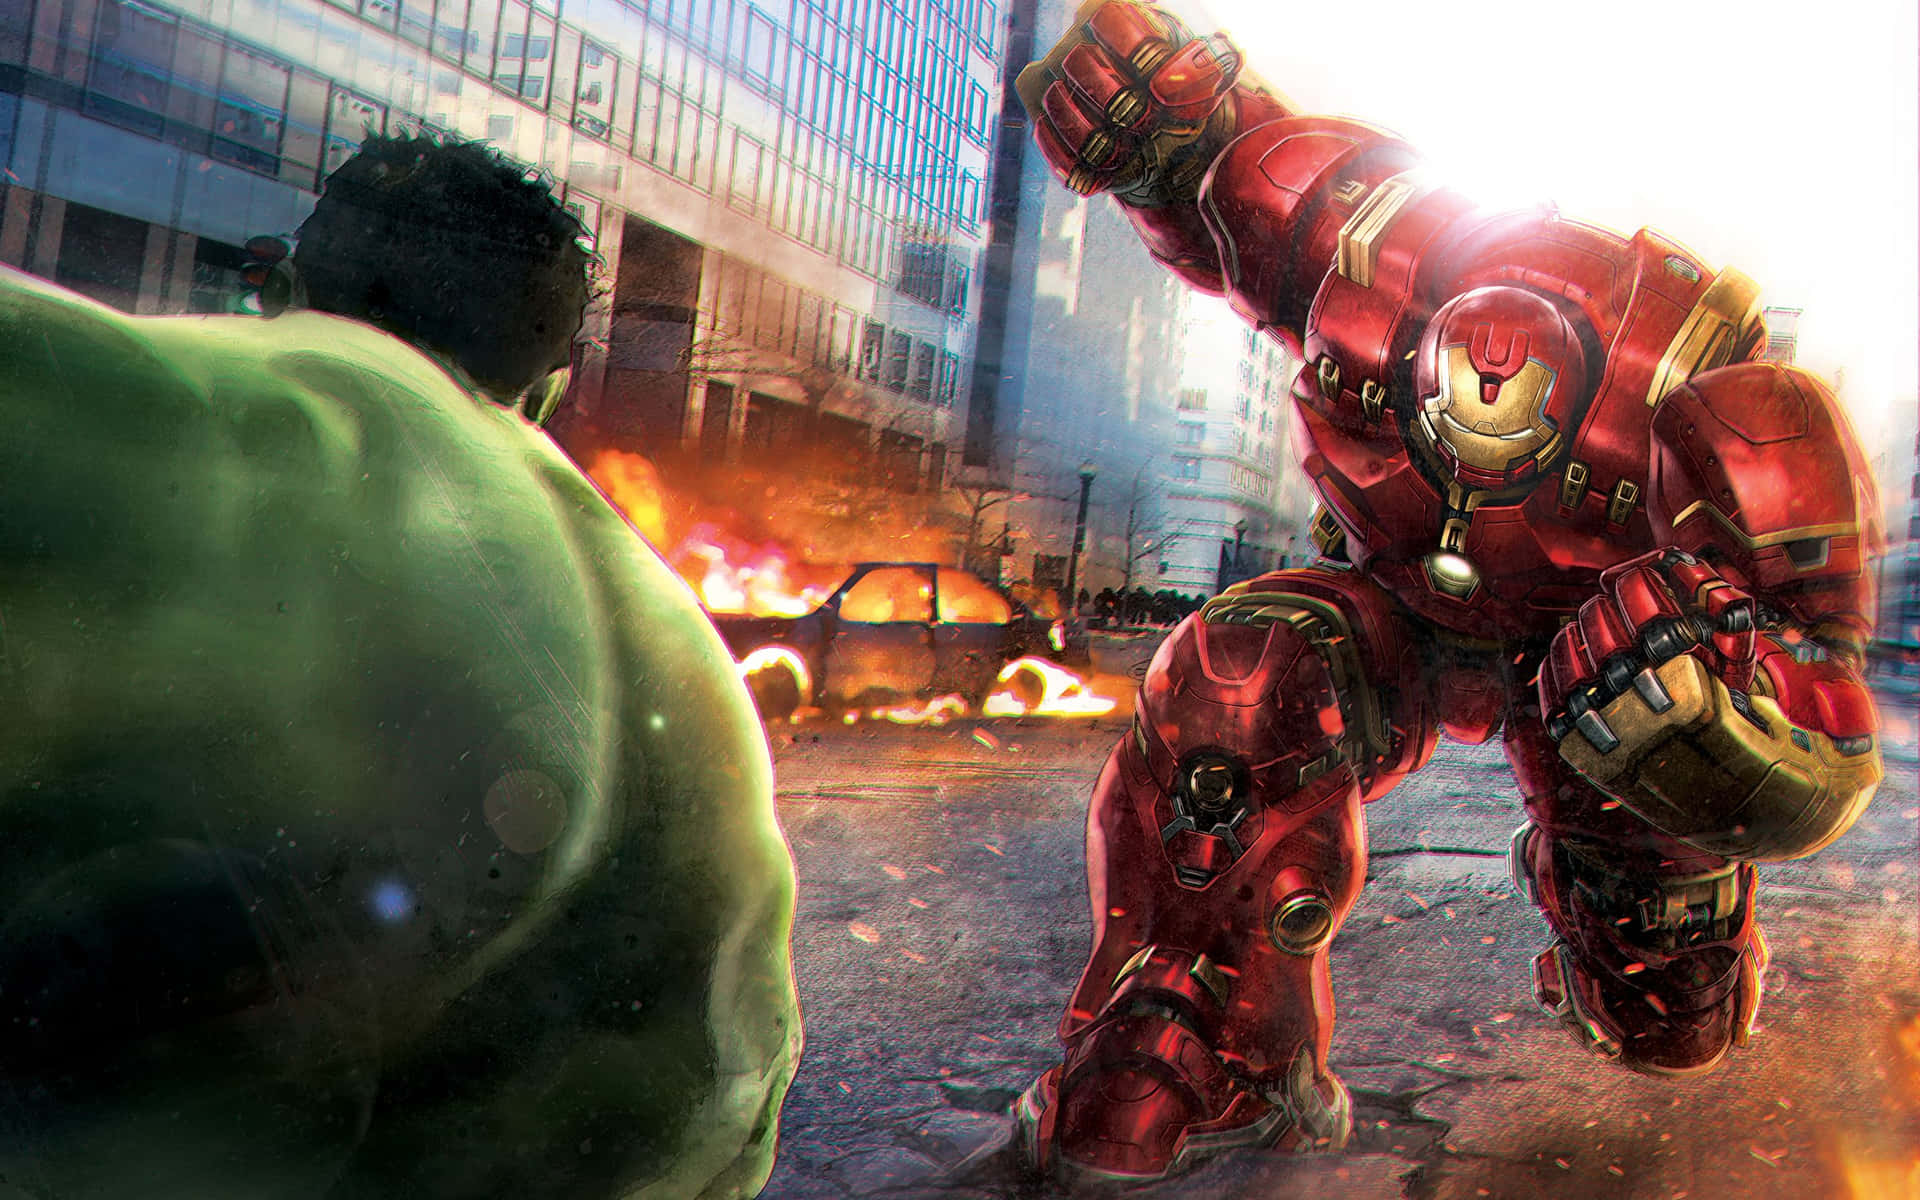 Iron Man and The Hulk Clash in a Marvel Superhero Showdown" Wallpaper